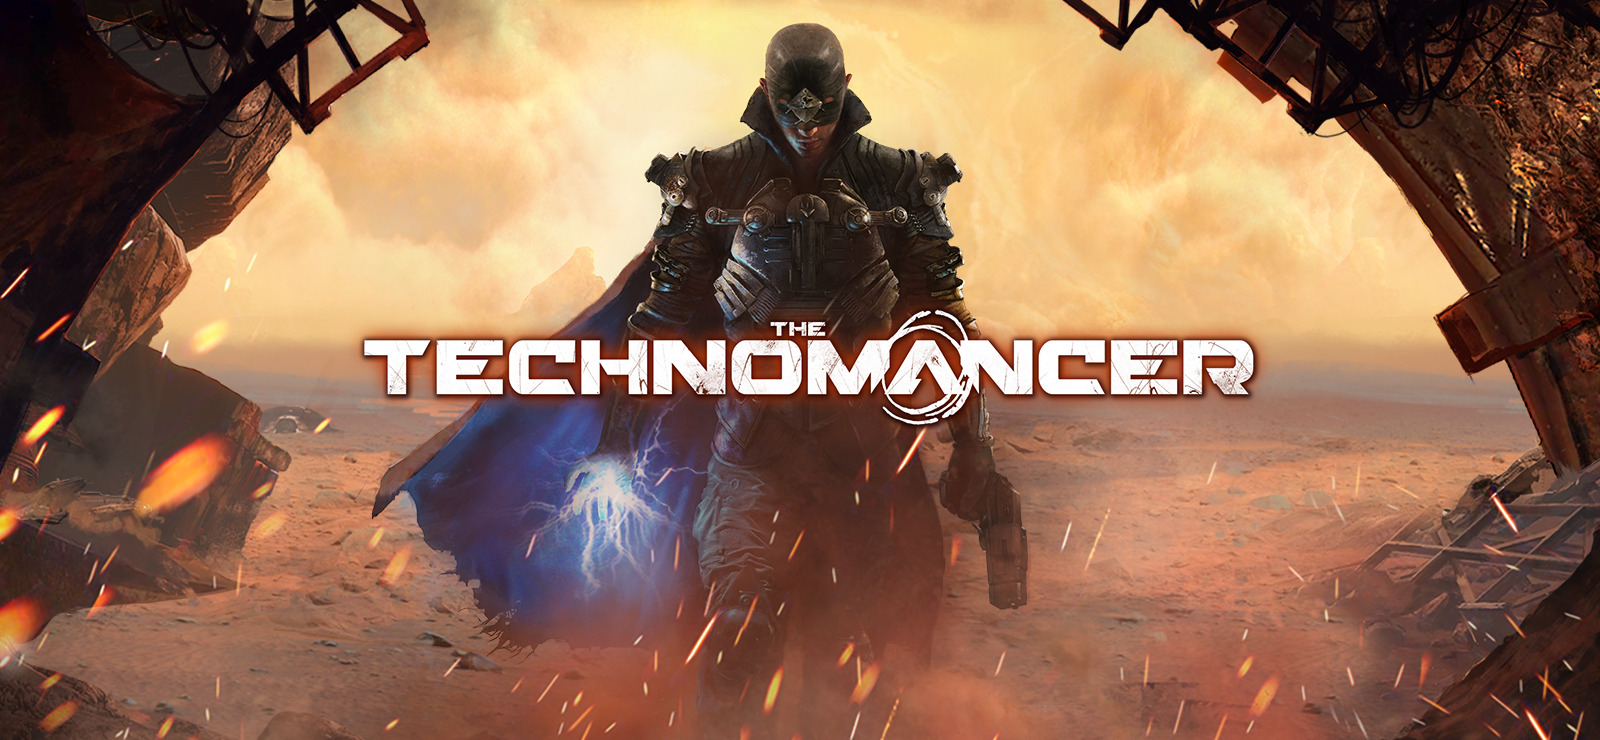 The Technomancer Mobile Game Full Version Download